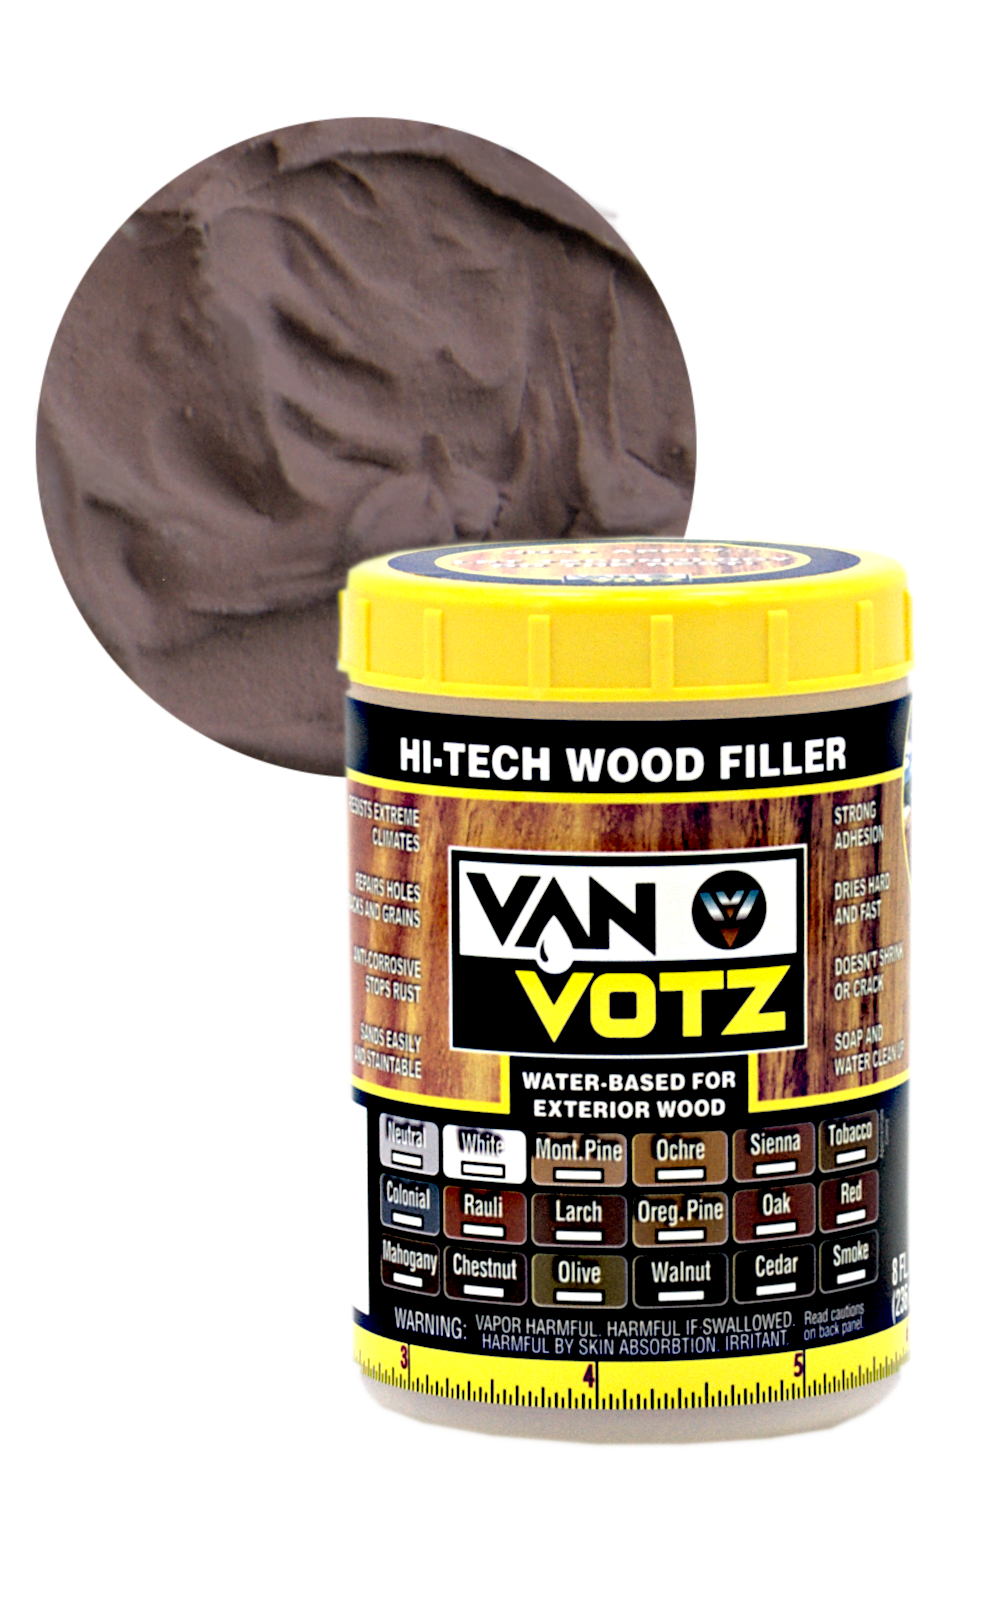 Hi-Tech Wood Filler